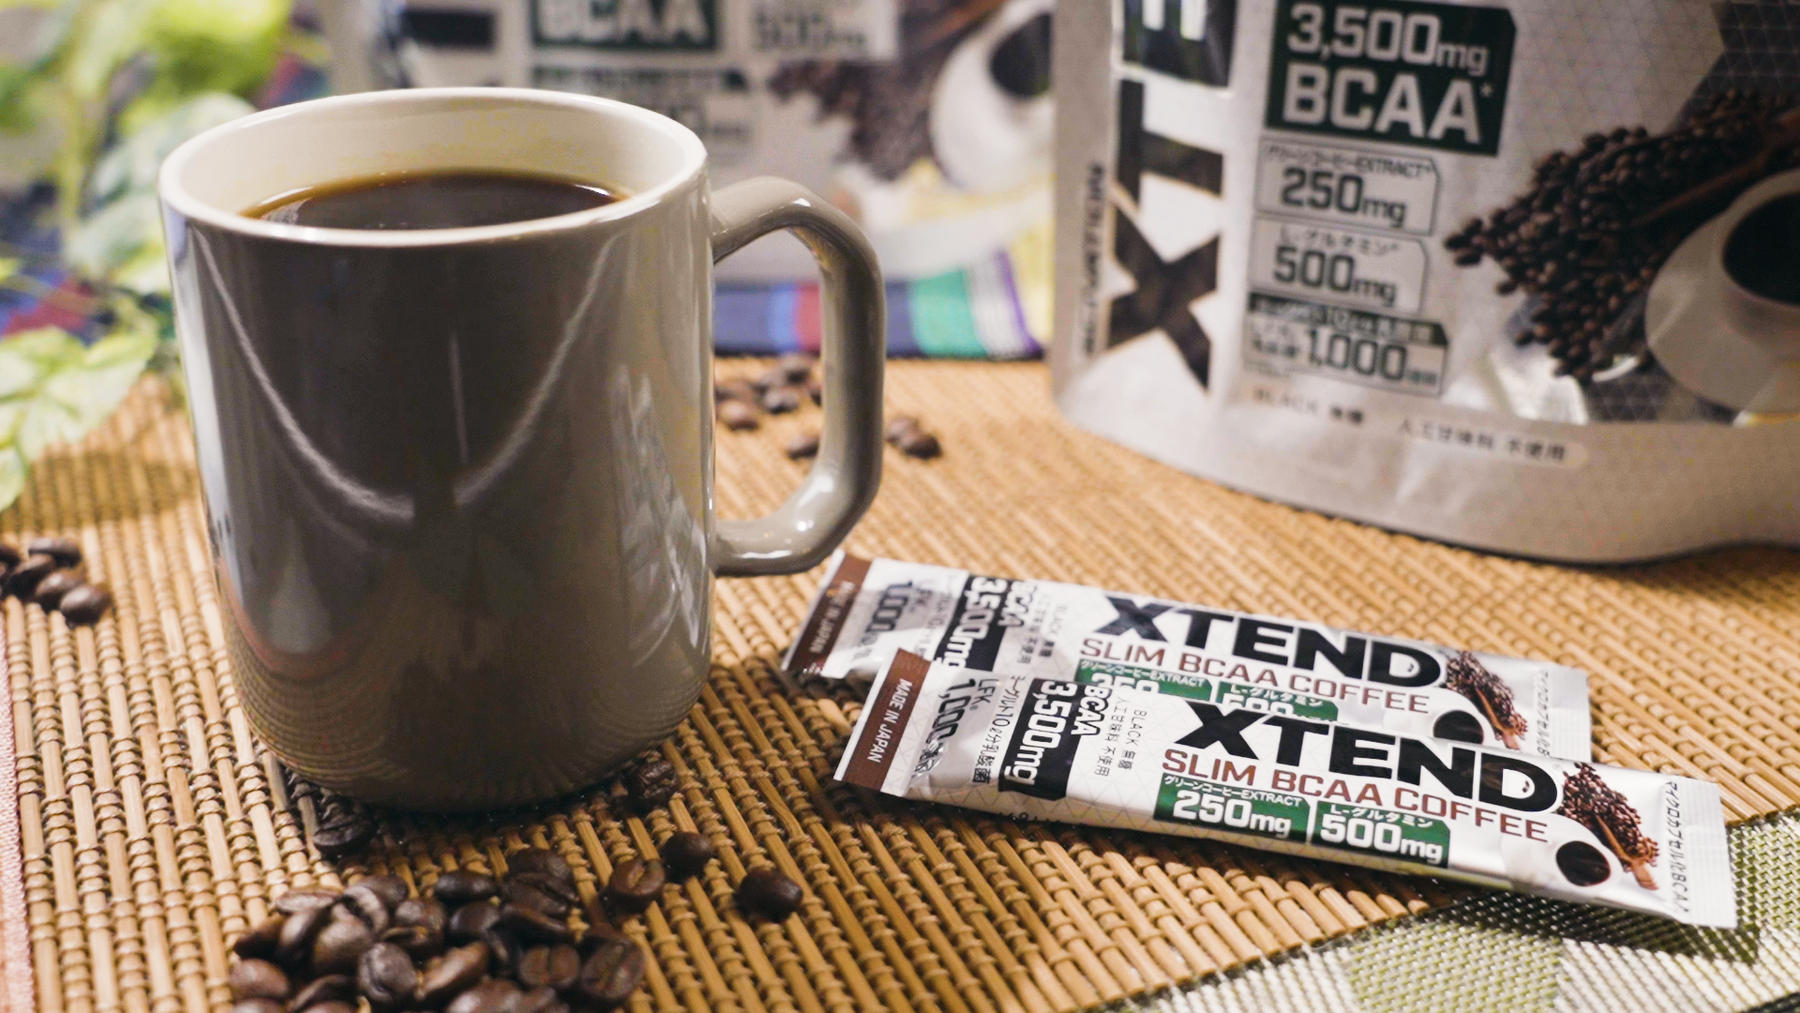 XTEND SLIM BCAA COFFEE 8.3g×30包 – アダプトゲン製薬株式会社